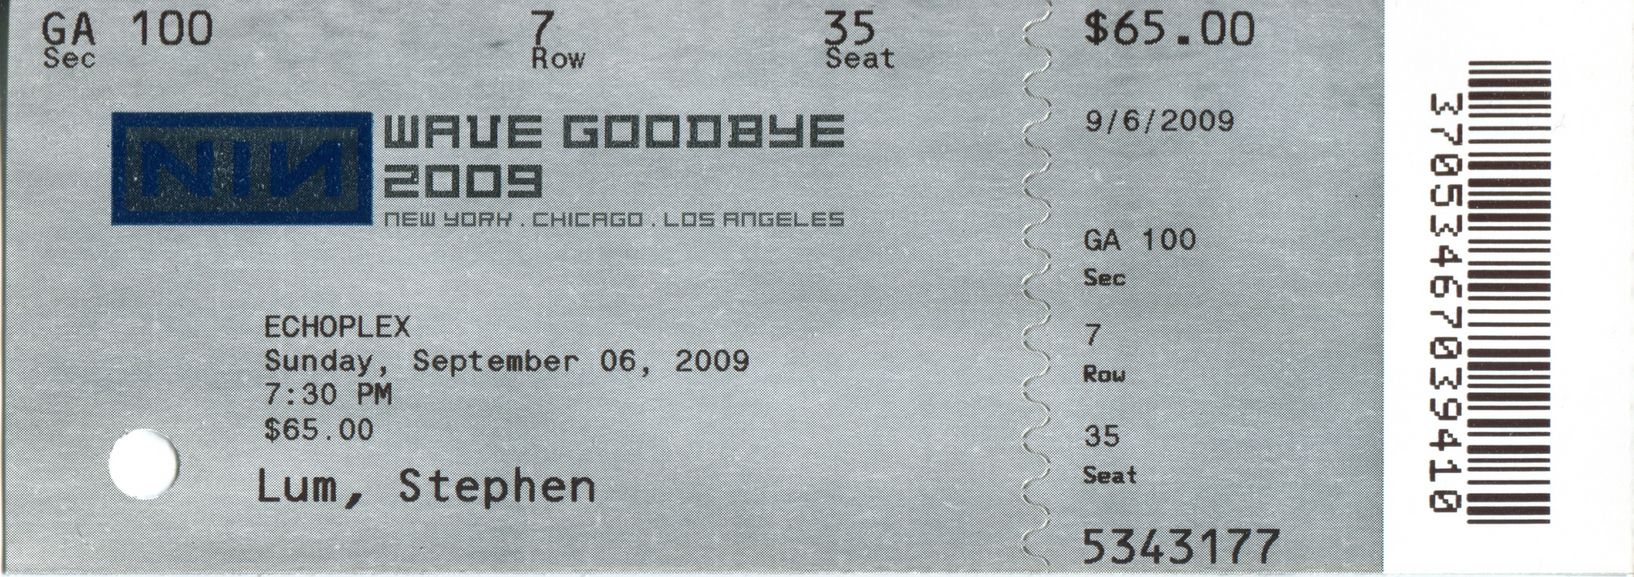 2009/09/06 Ticket